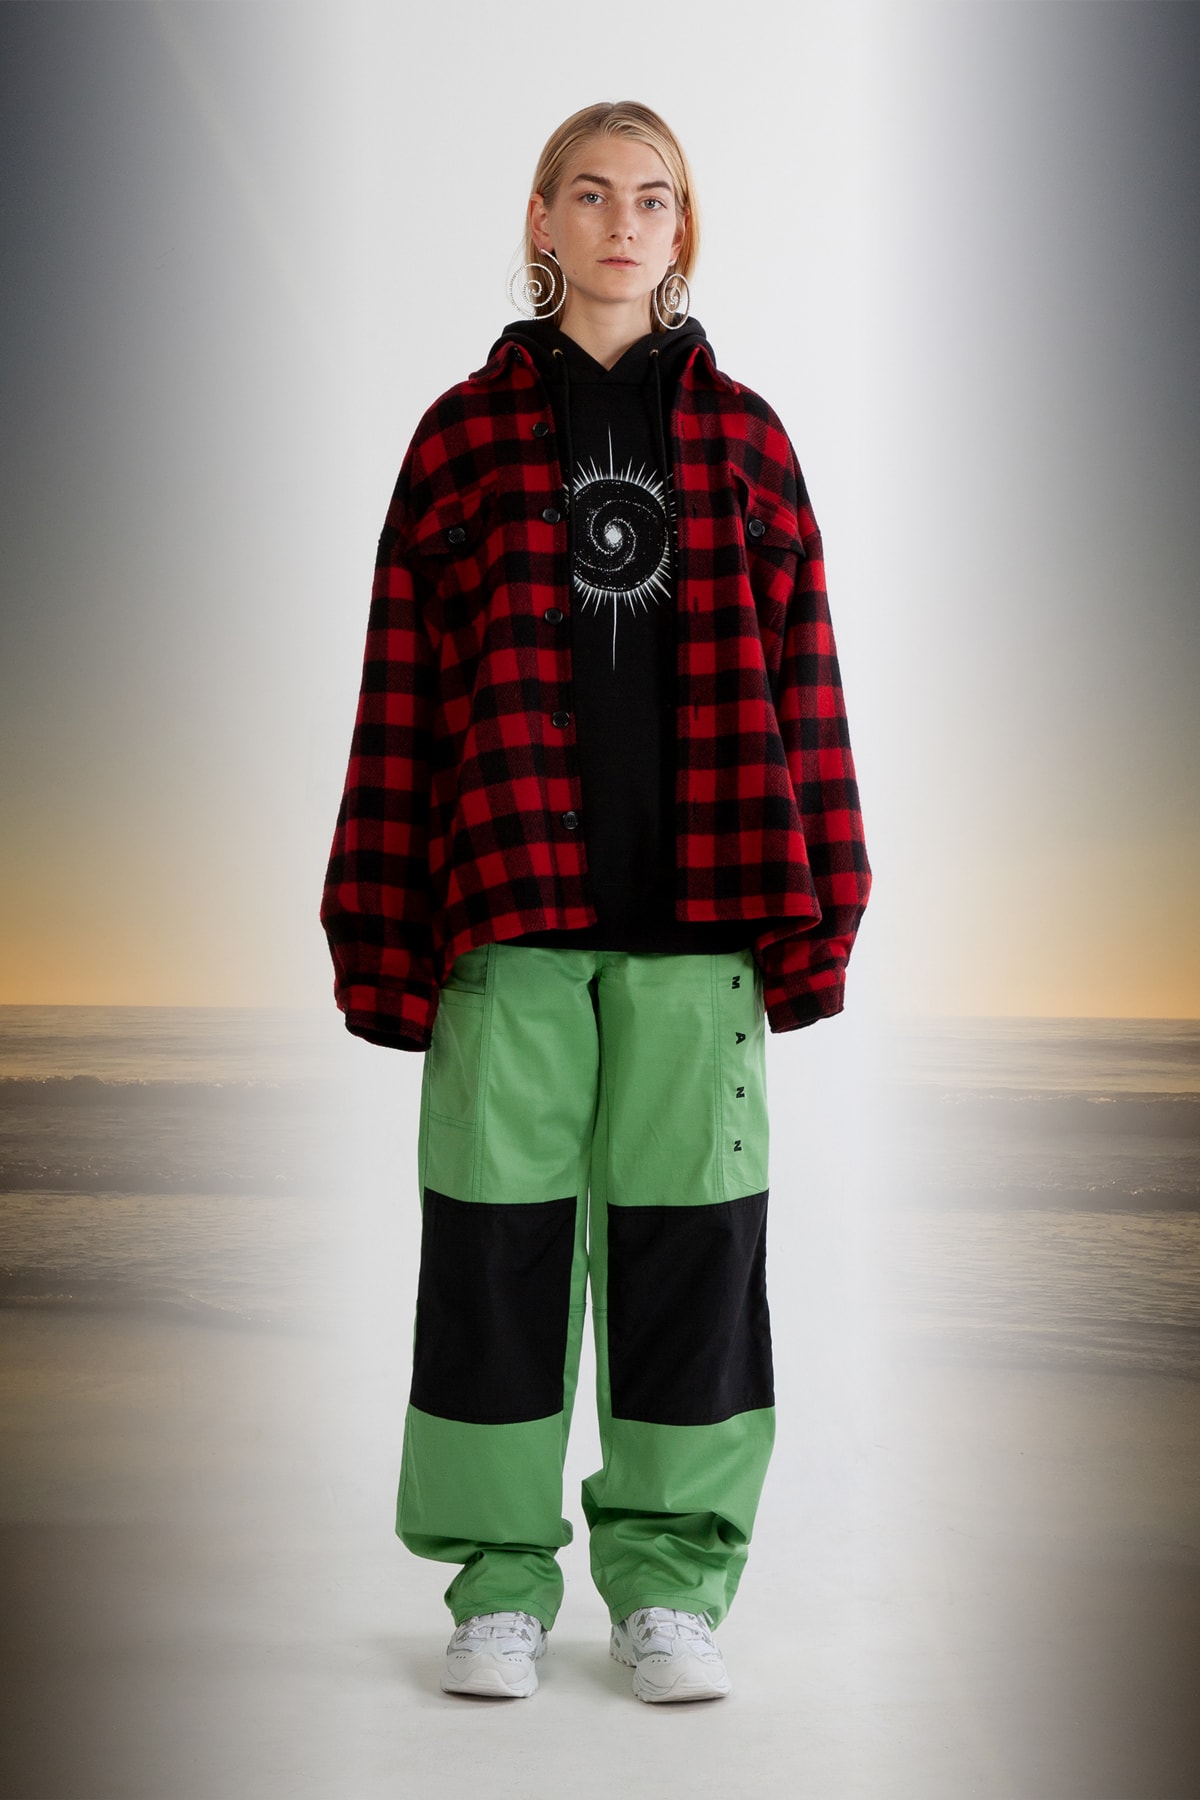 Julia Seeman Fall/Winter 2018 Collection Lookbook Plaid Shirt Red Hoodie Black Pants Green